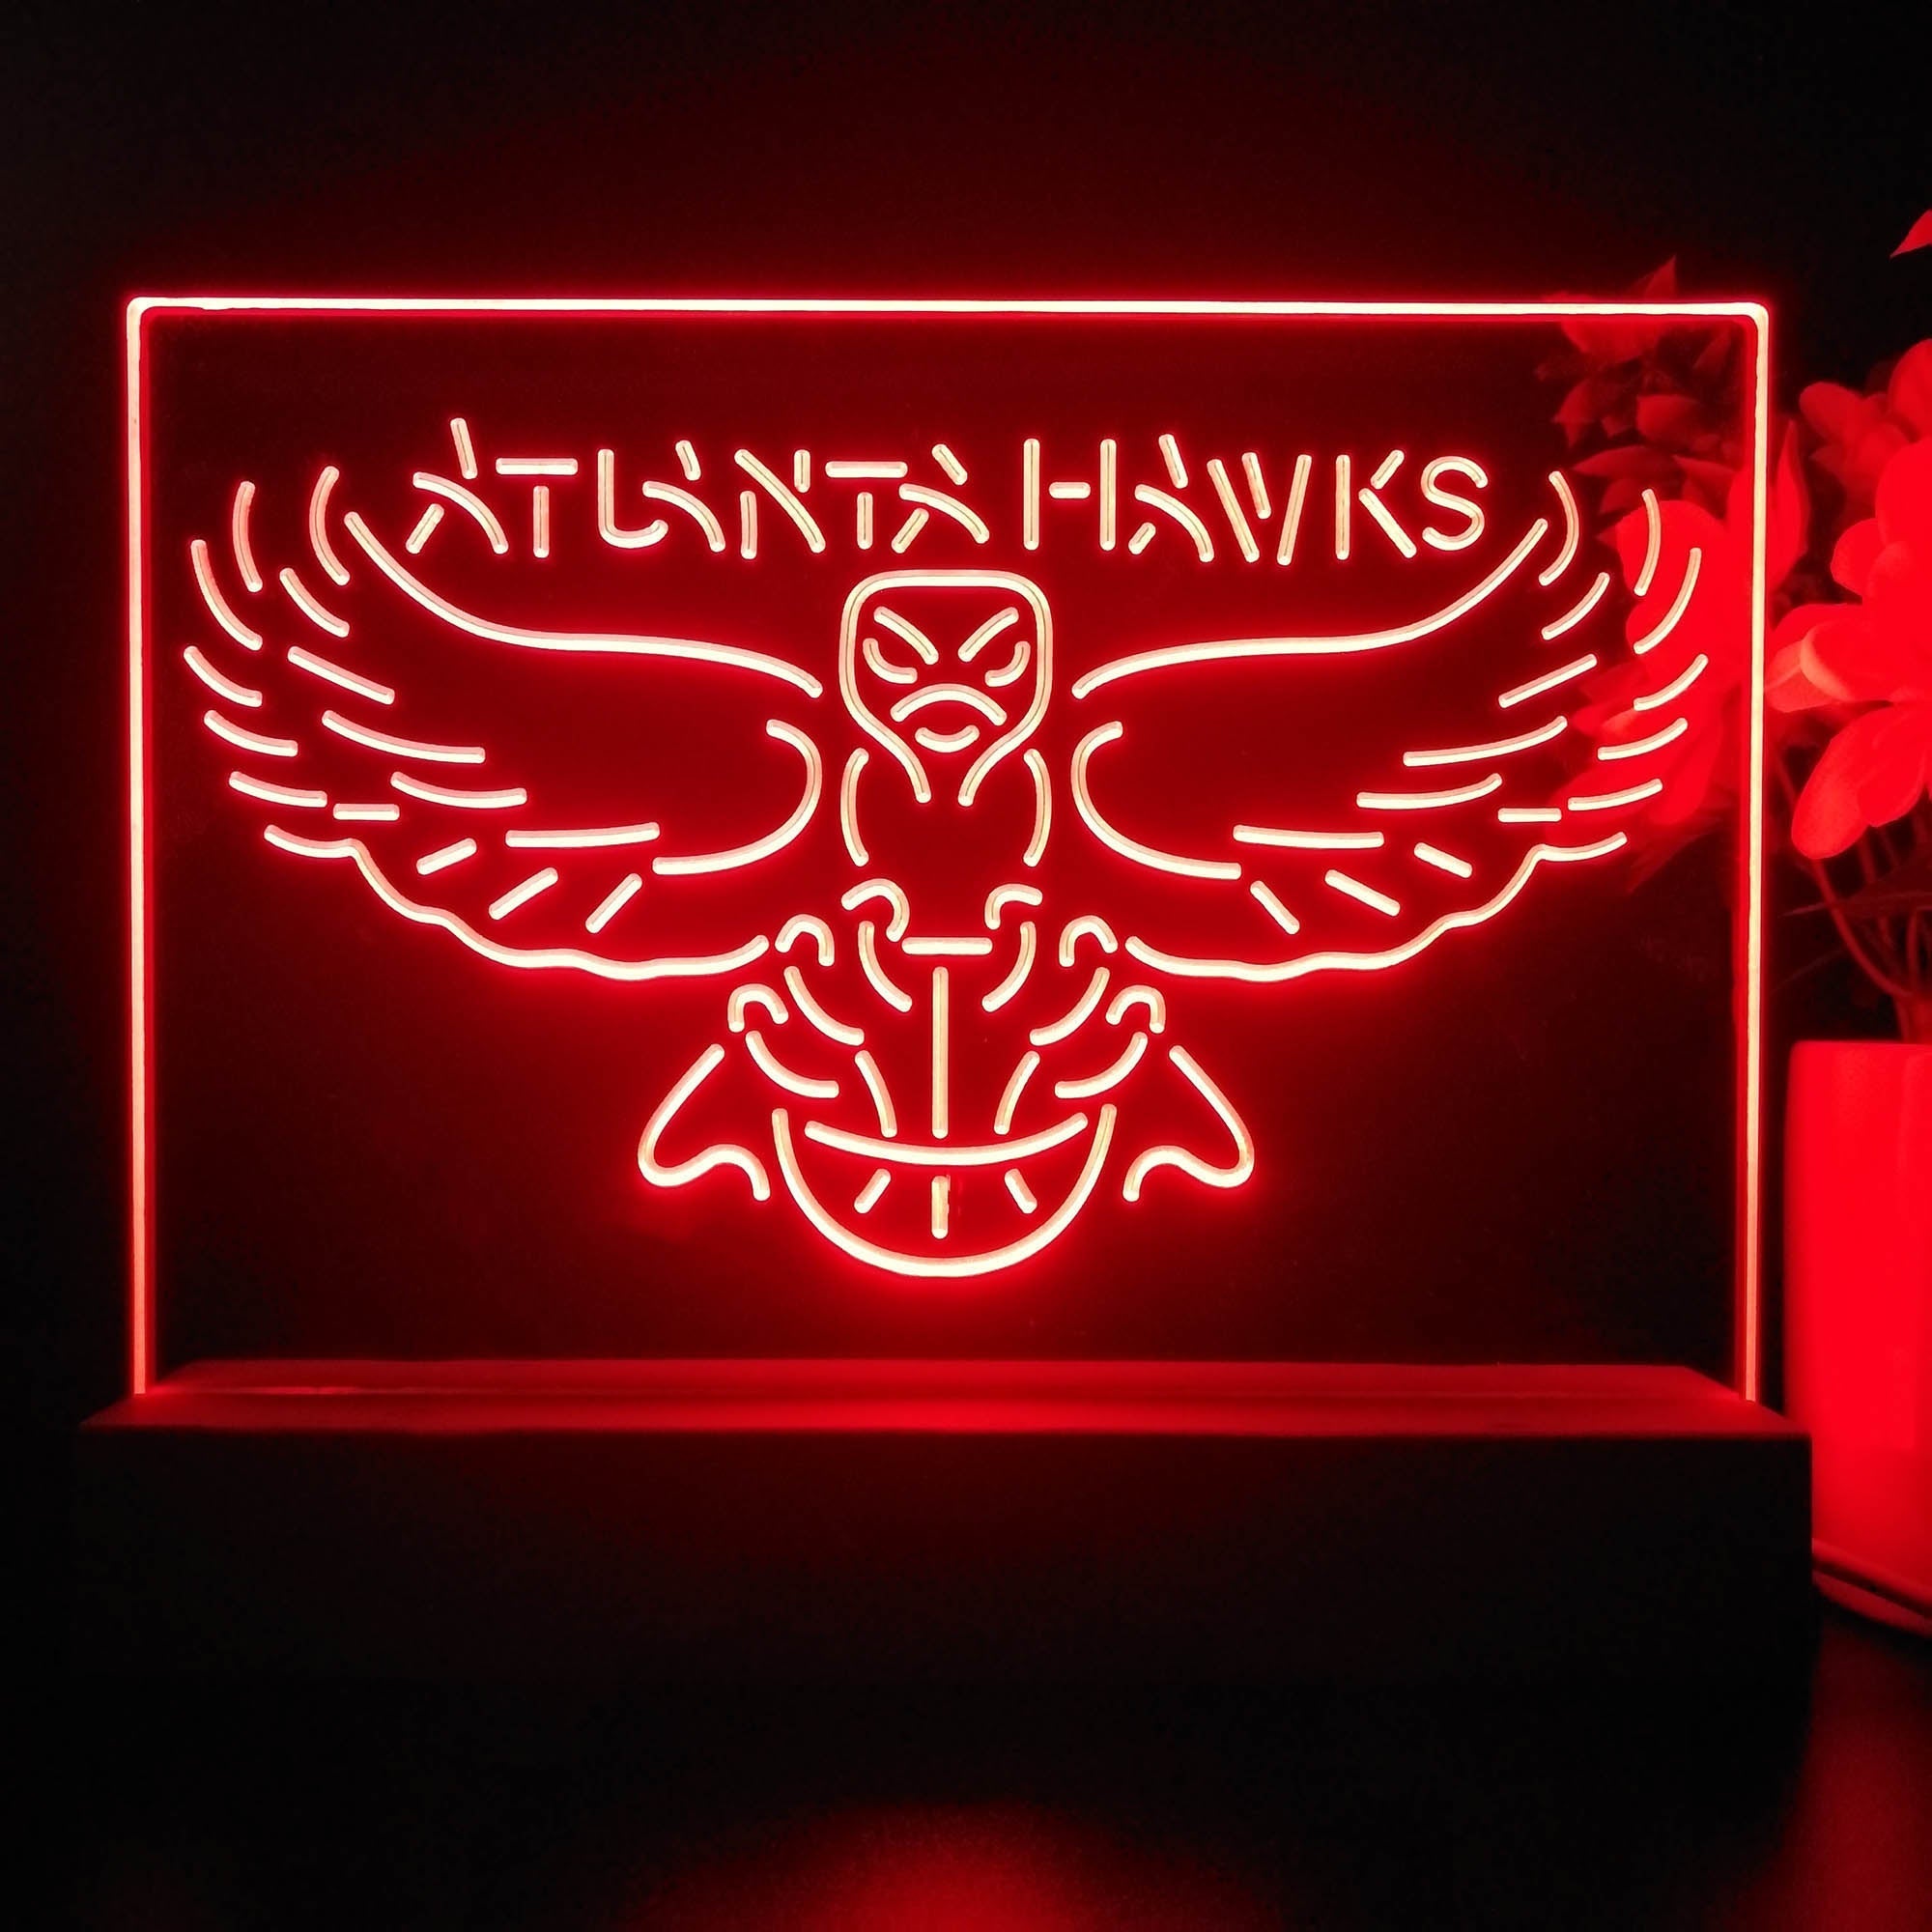 Atlanta Hawks 3D Illusion Night Light Desk Lamp